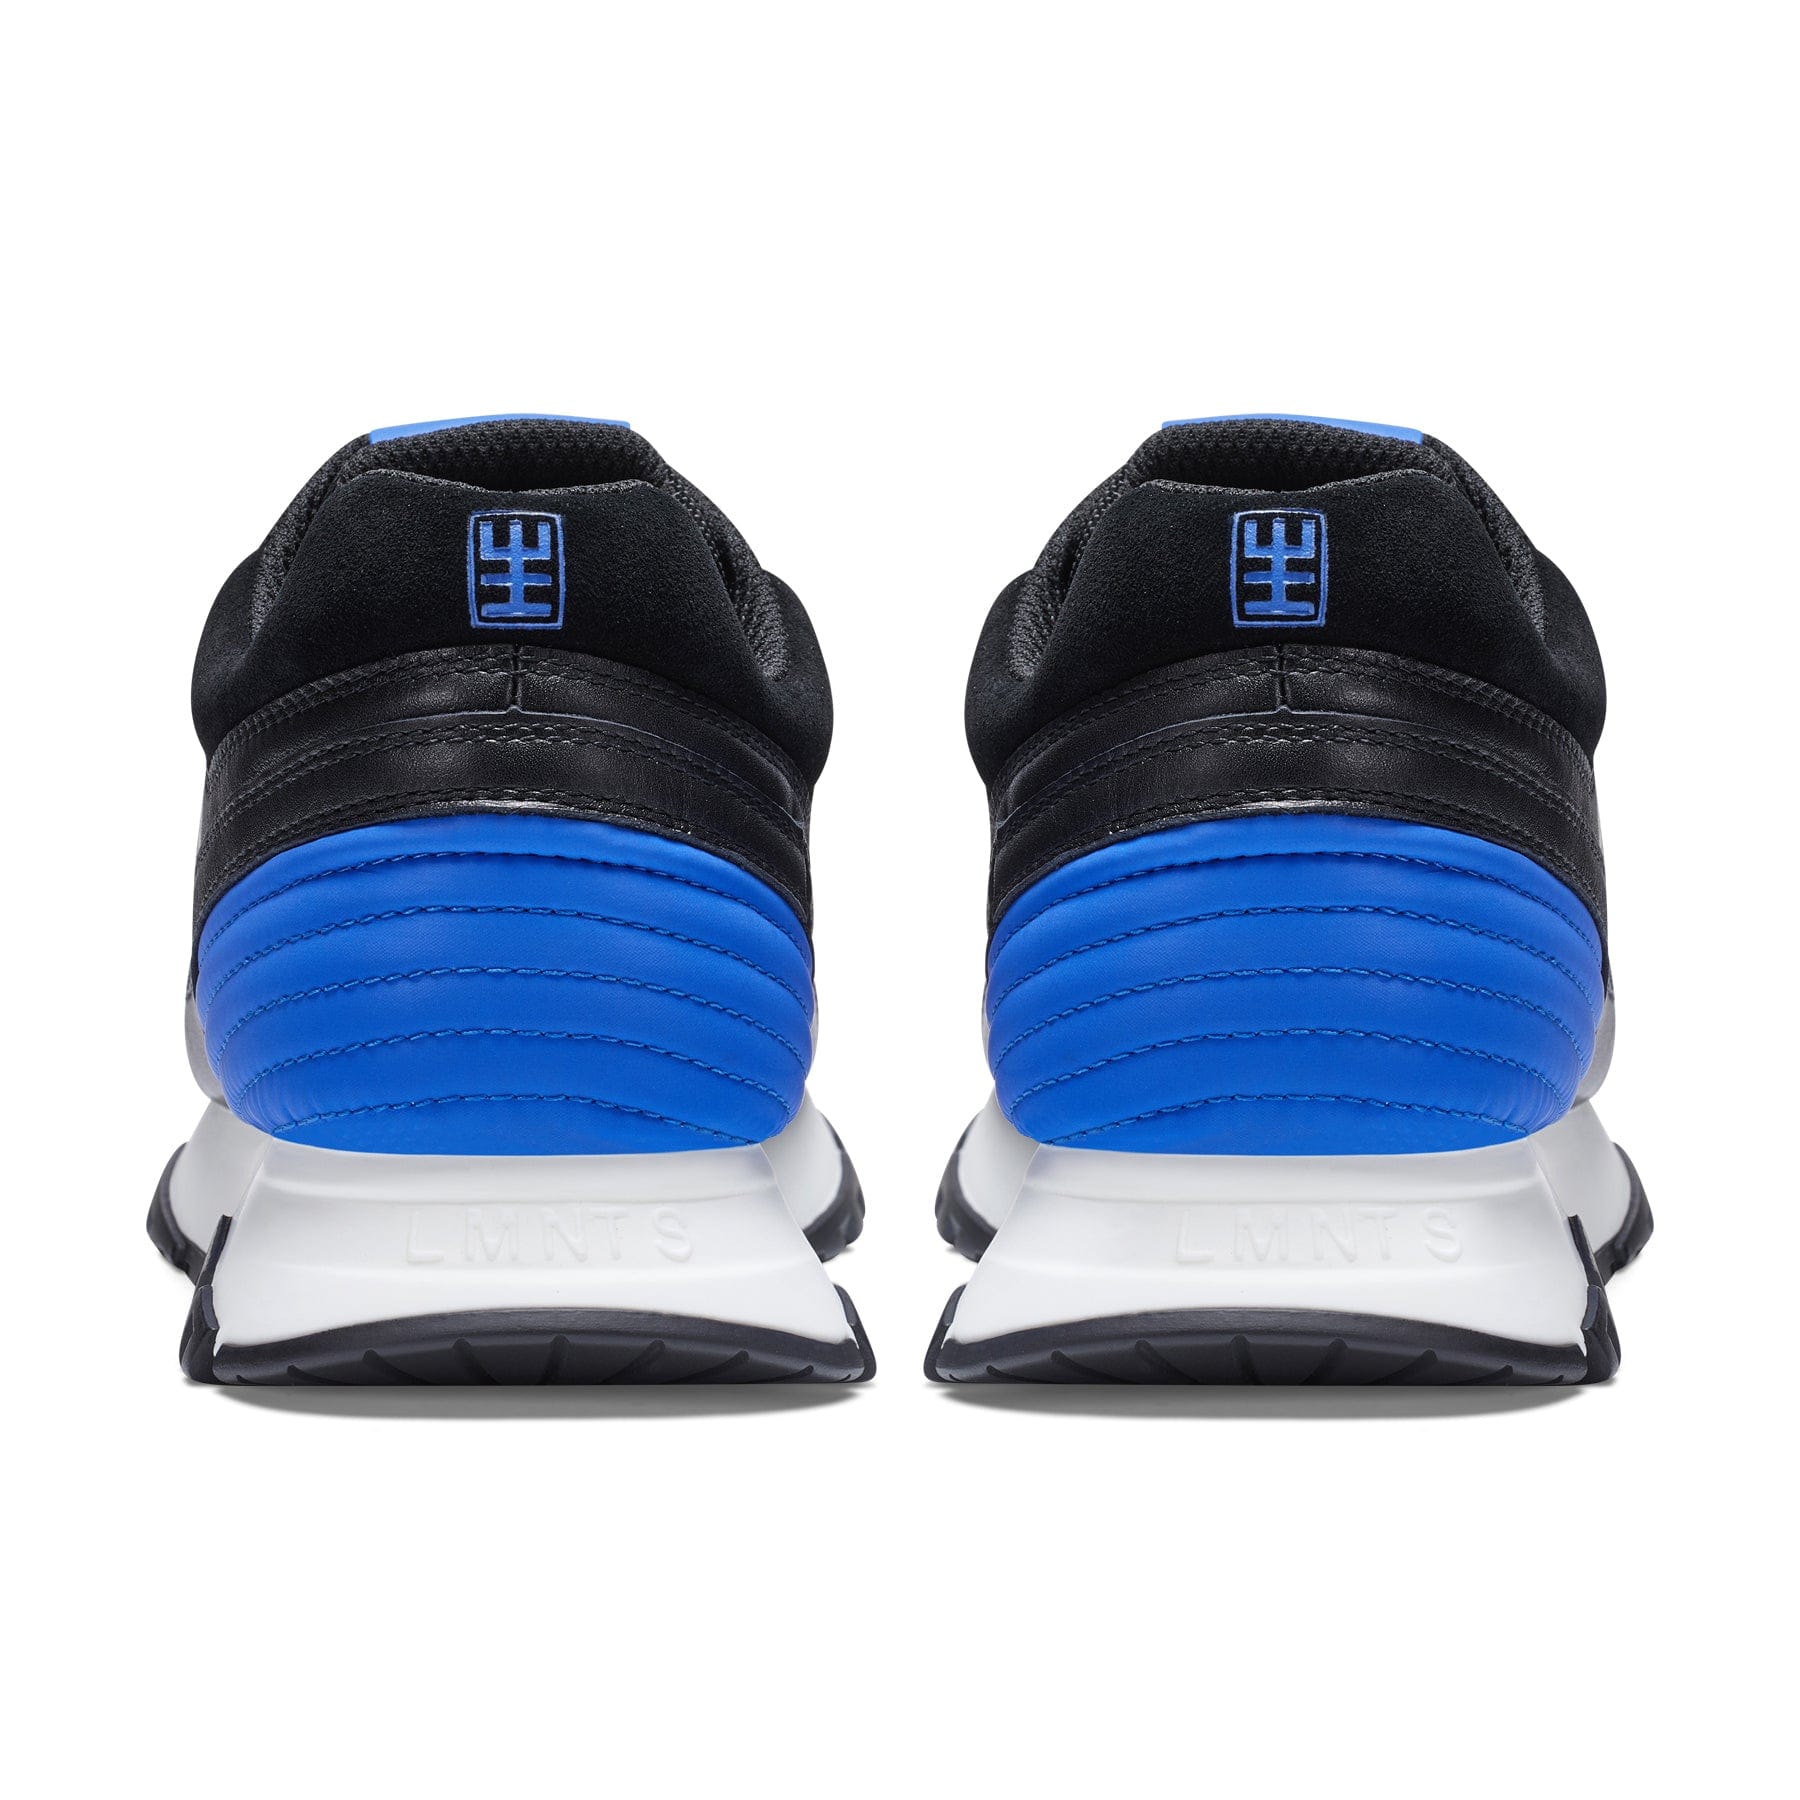 LMNTS Footwear Stellar - Black / Blue / White